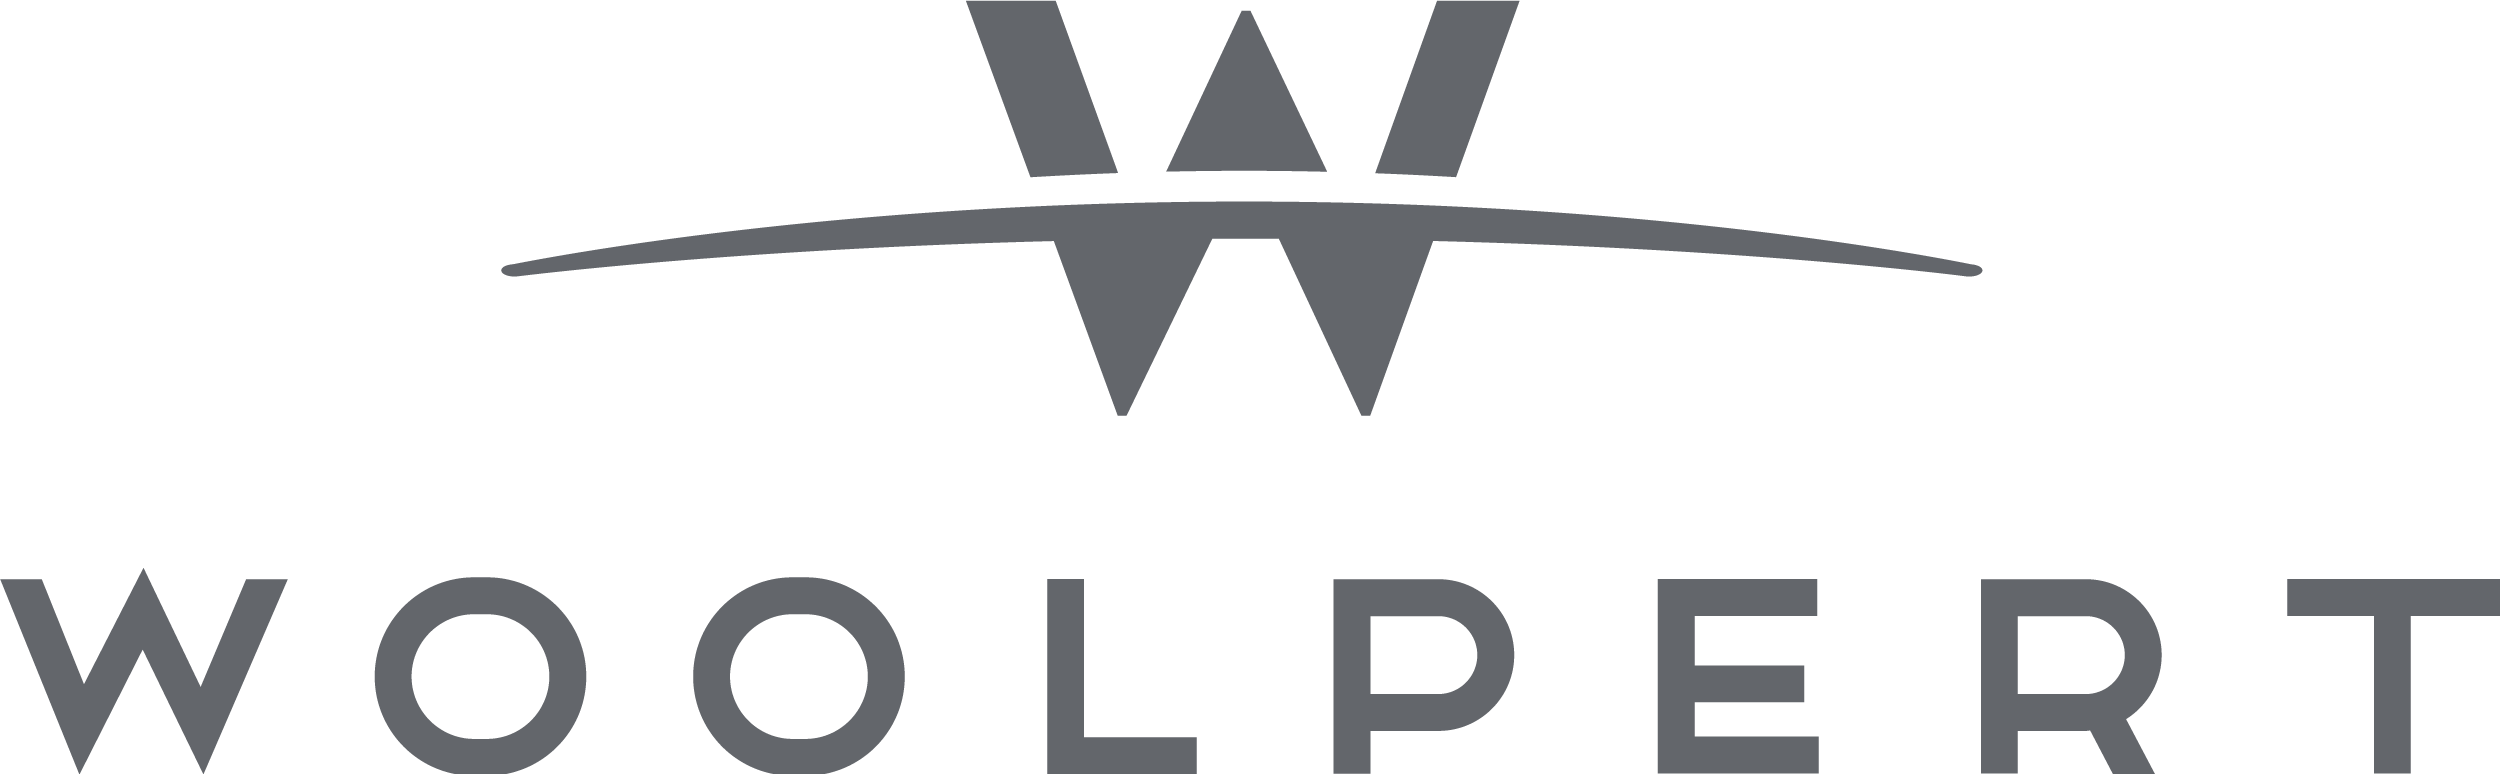 Logotipo da Woolpert